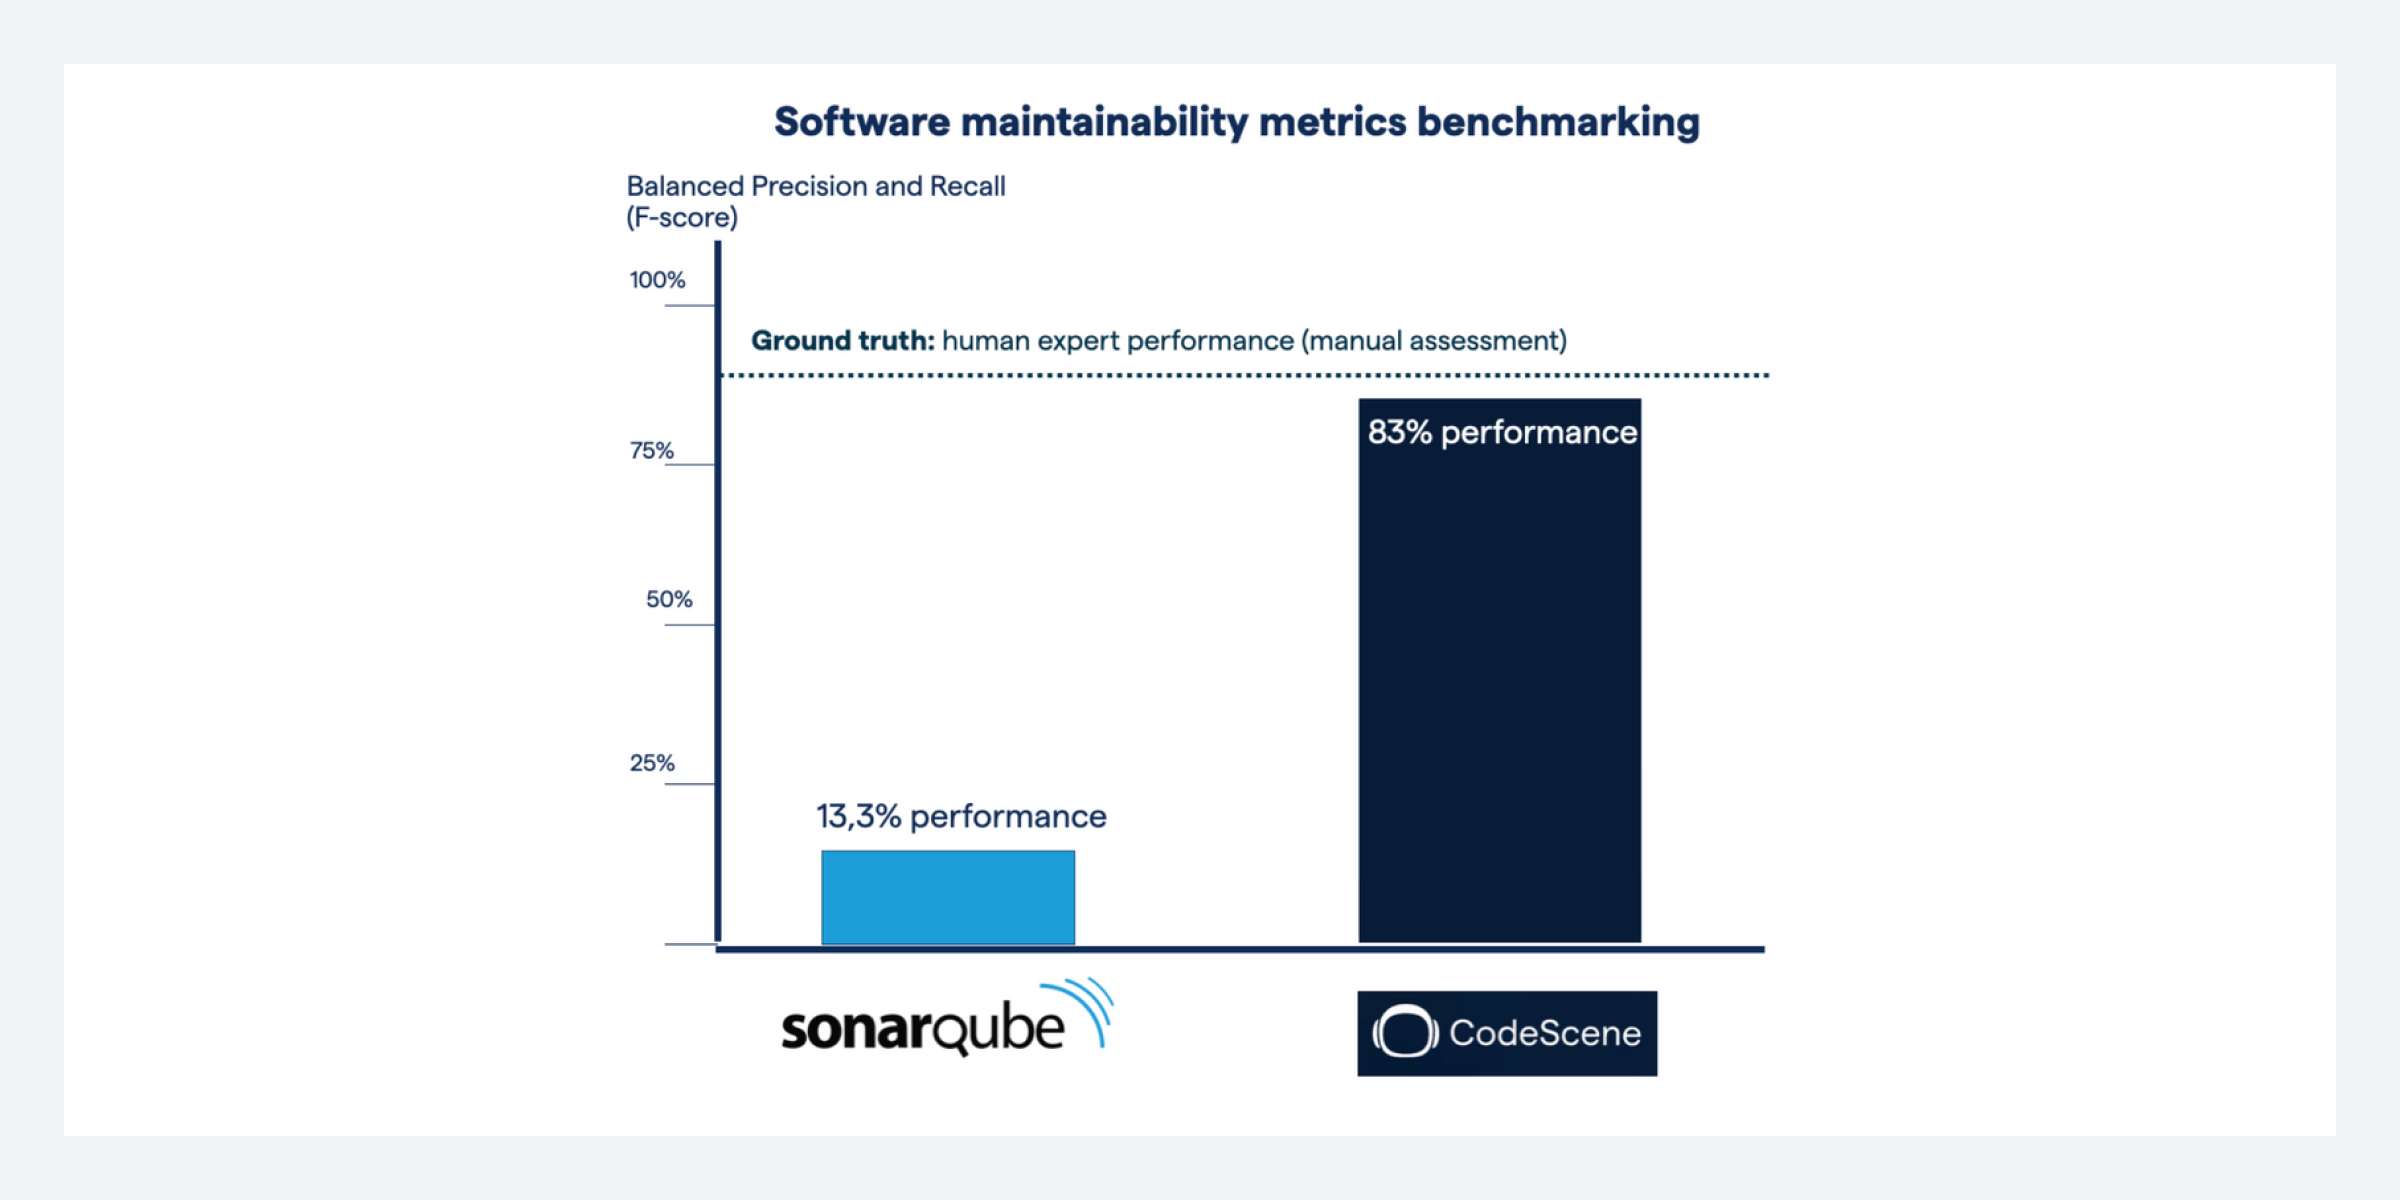 CodeScene surpasses SonarQube by 6 times on the public software maintainability dataset, scoring 83% vs. SonarQube's 13.3% using F-score.